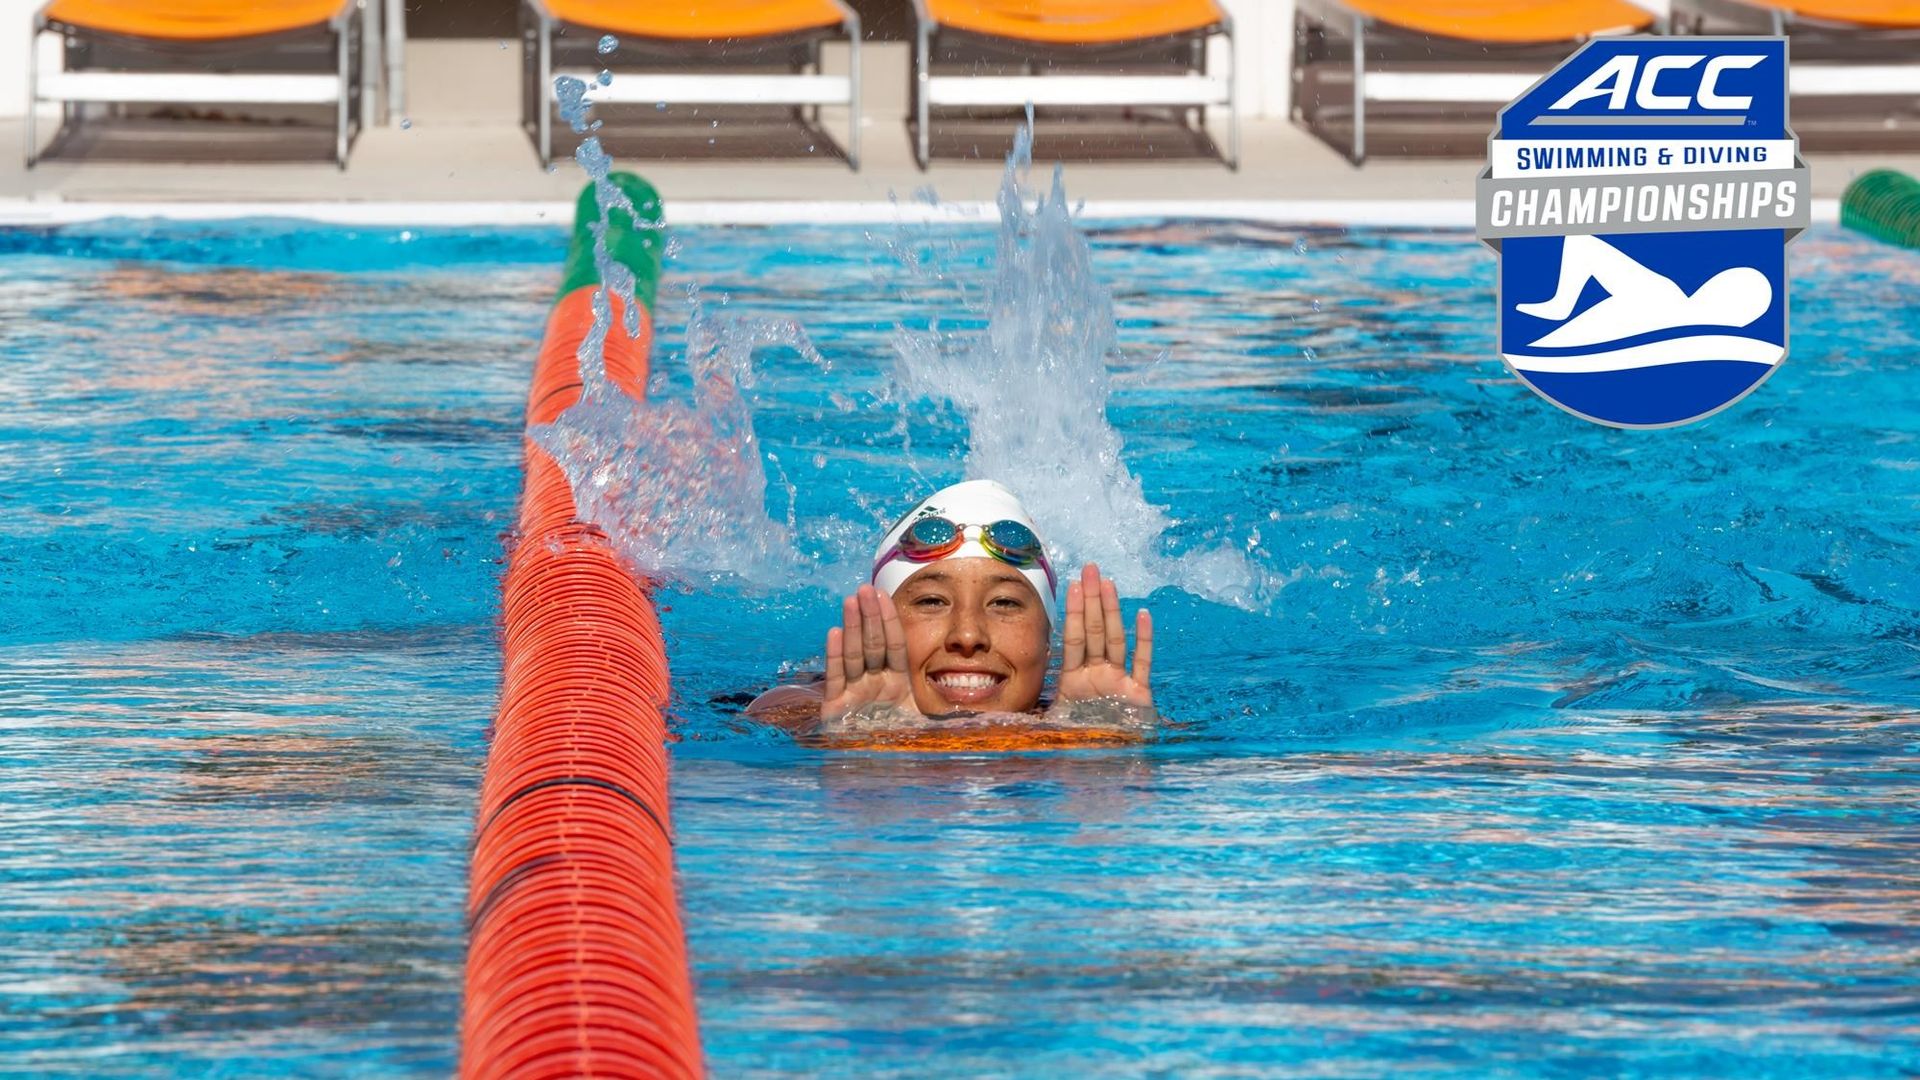 Swim / Dive Set for Greensboro, ACC Championships